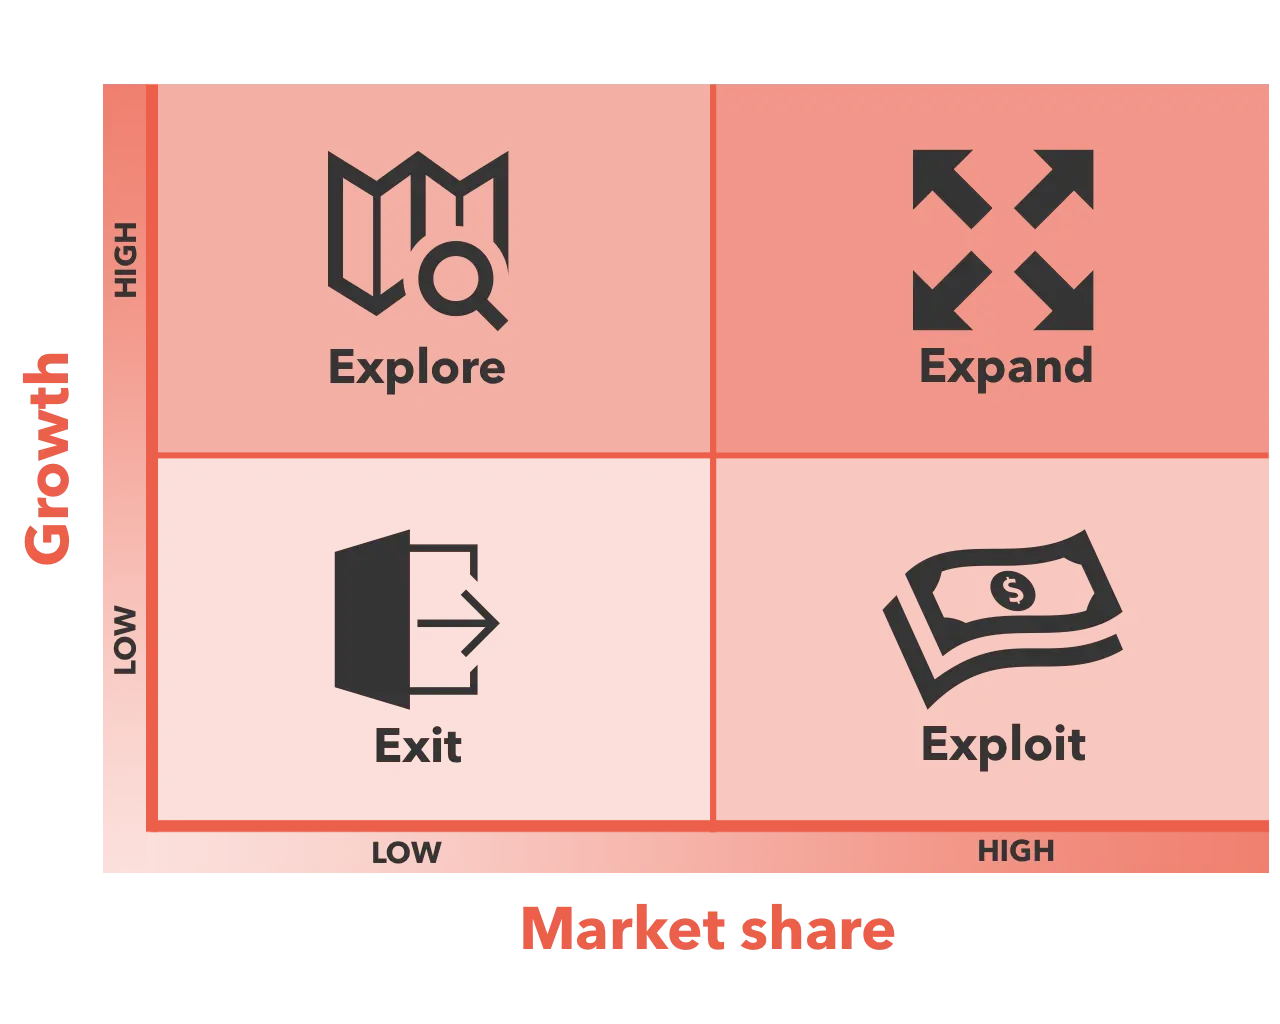 An OKRs product portfolio matrix diagram